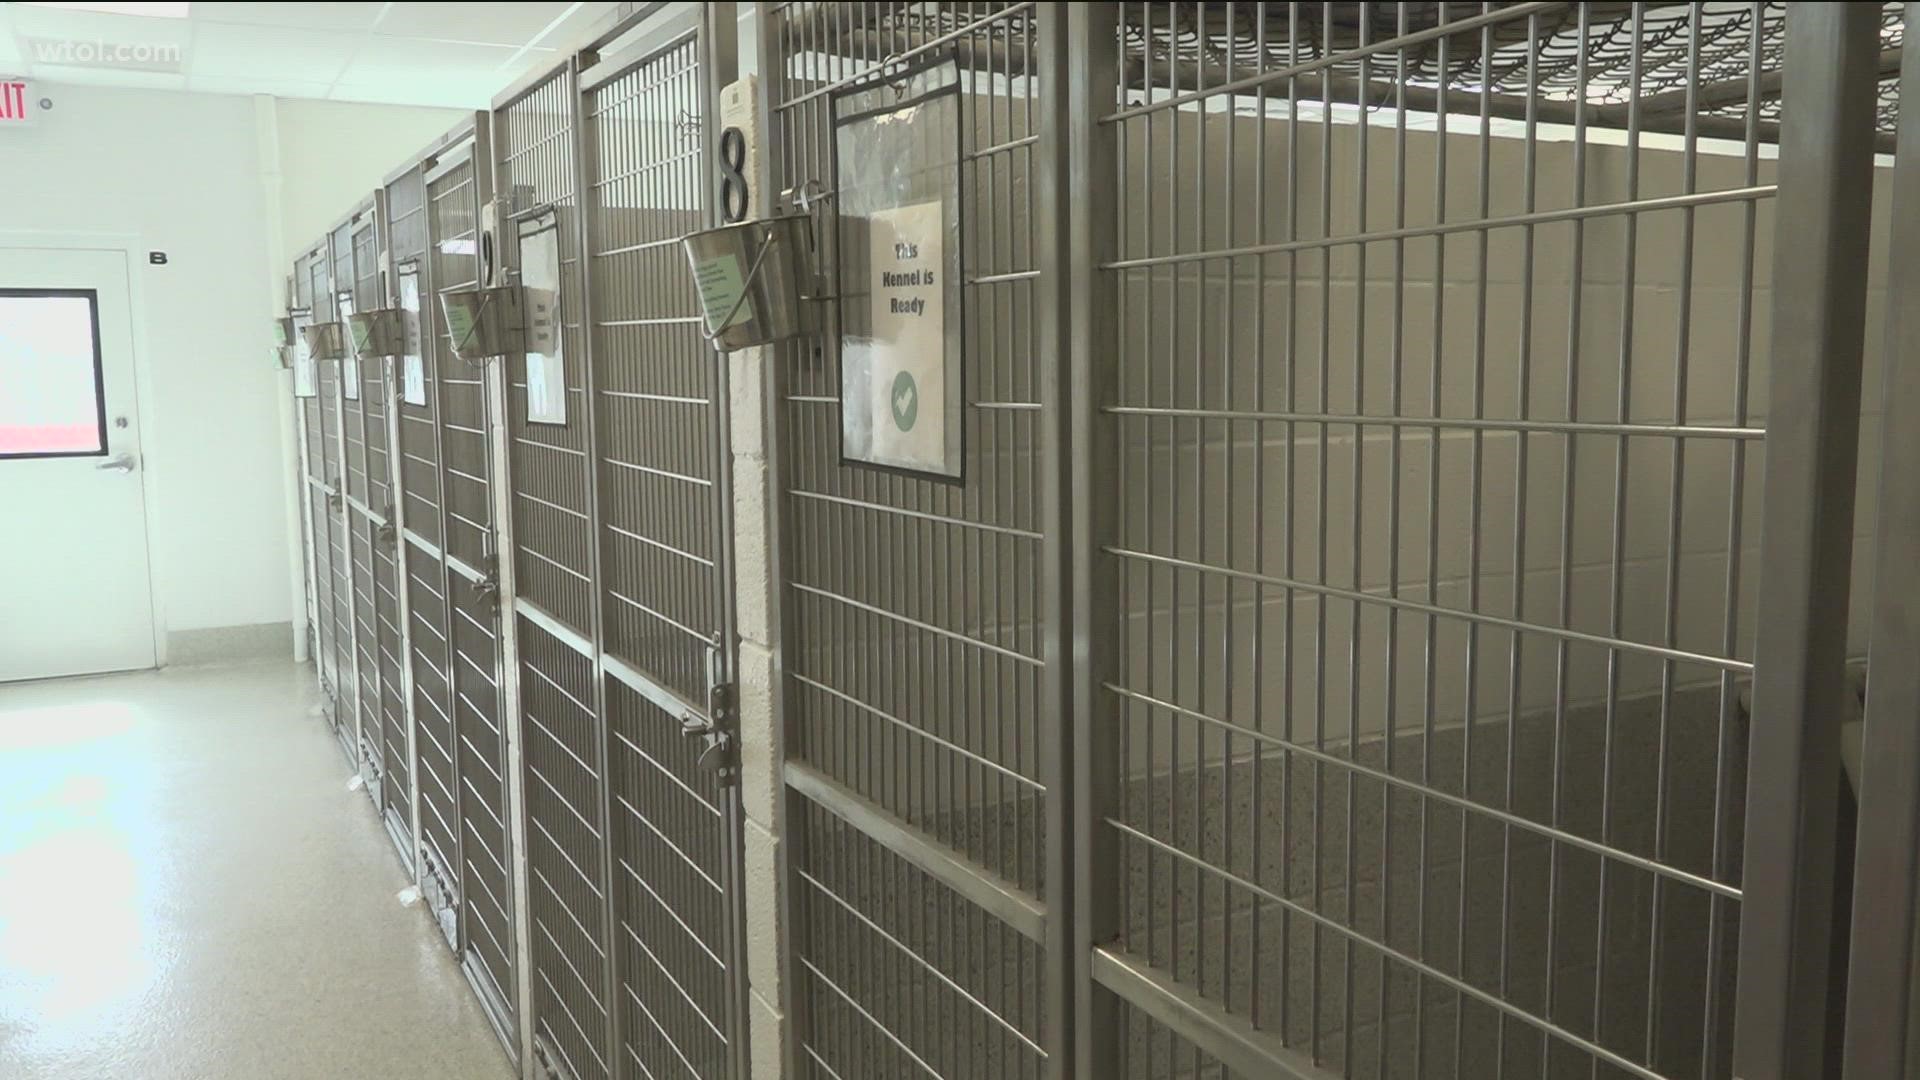 Wood County Humane Society sees near-empty shelter